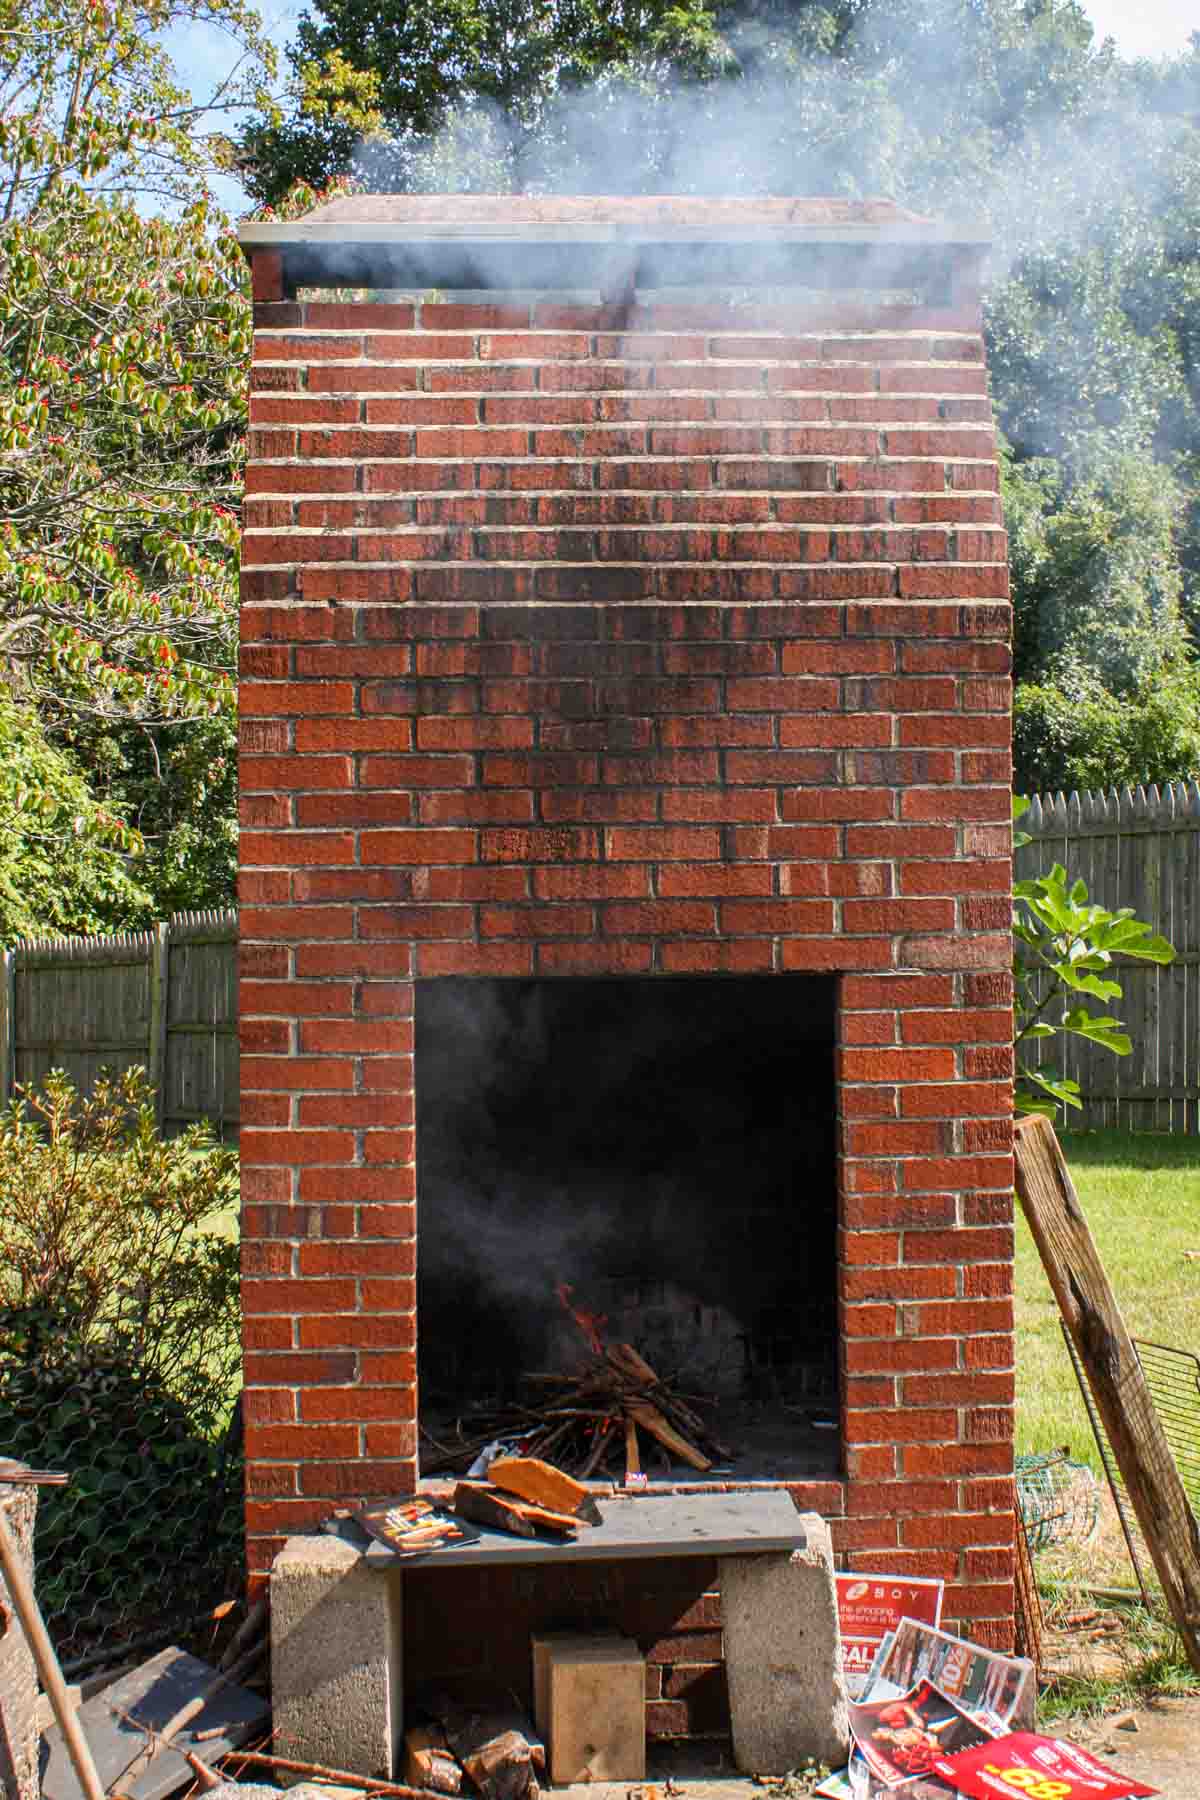 A brick fireplace smoking Portuguese sausage